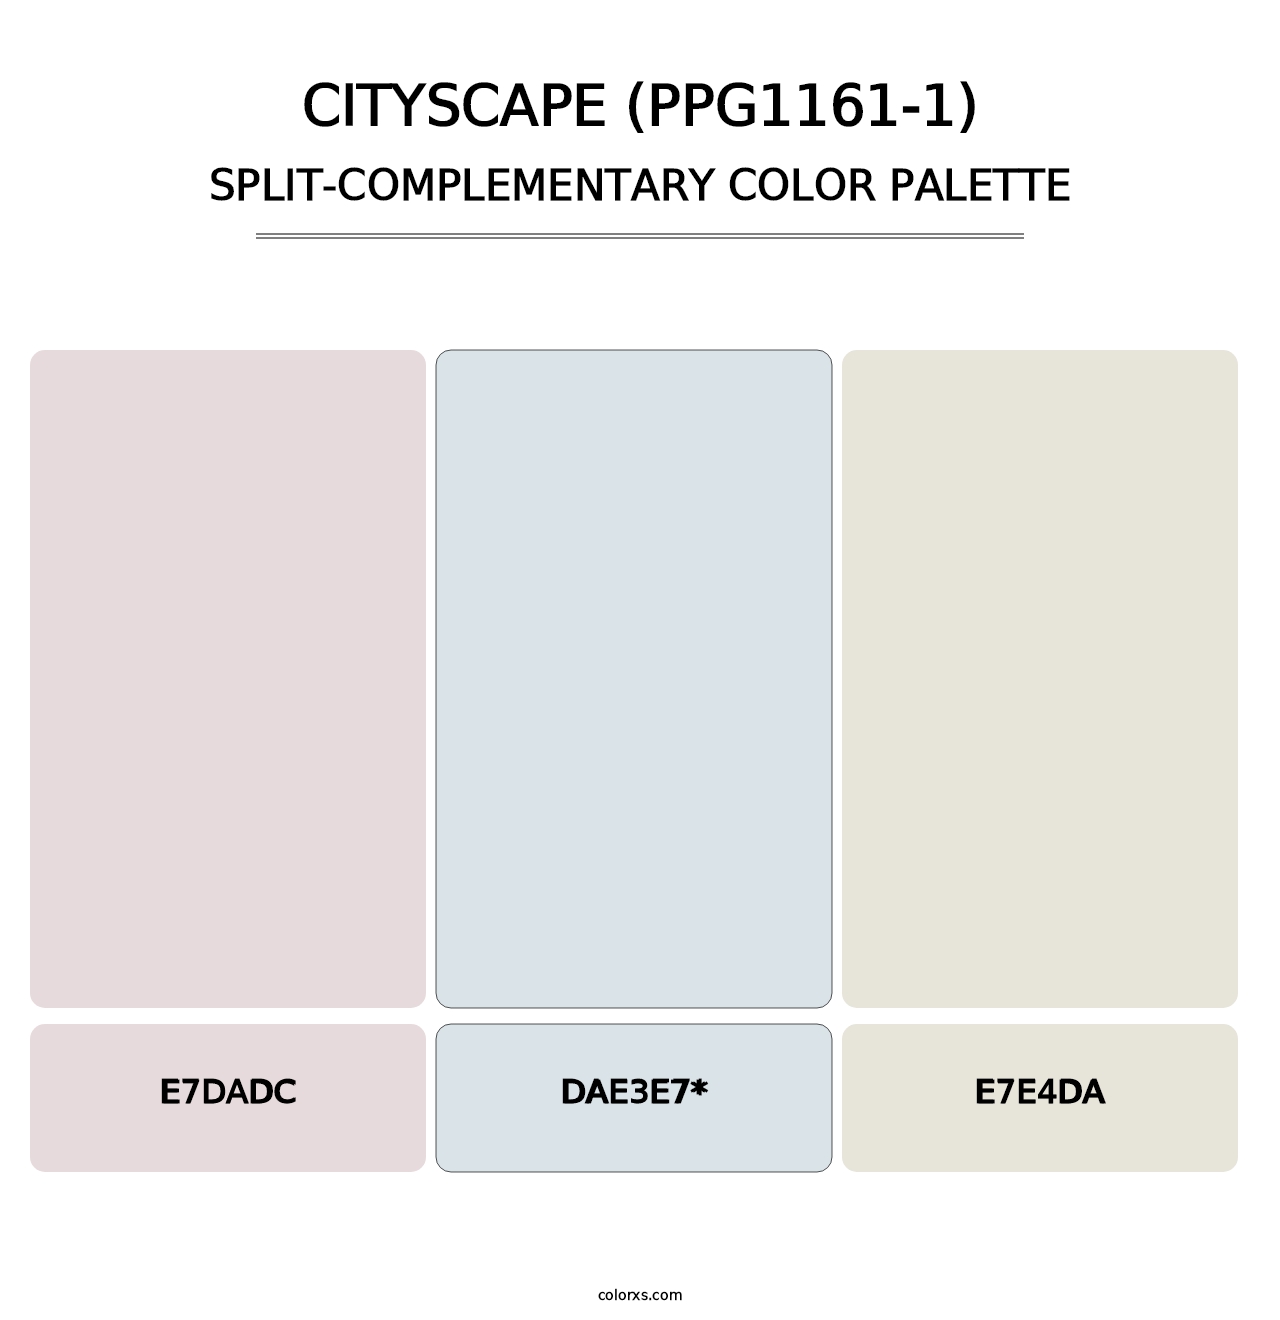 Cityscape (PPG1161-1) - Split-Complementary Color Palette